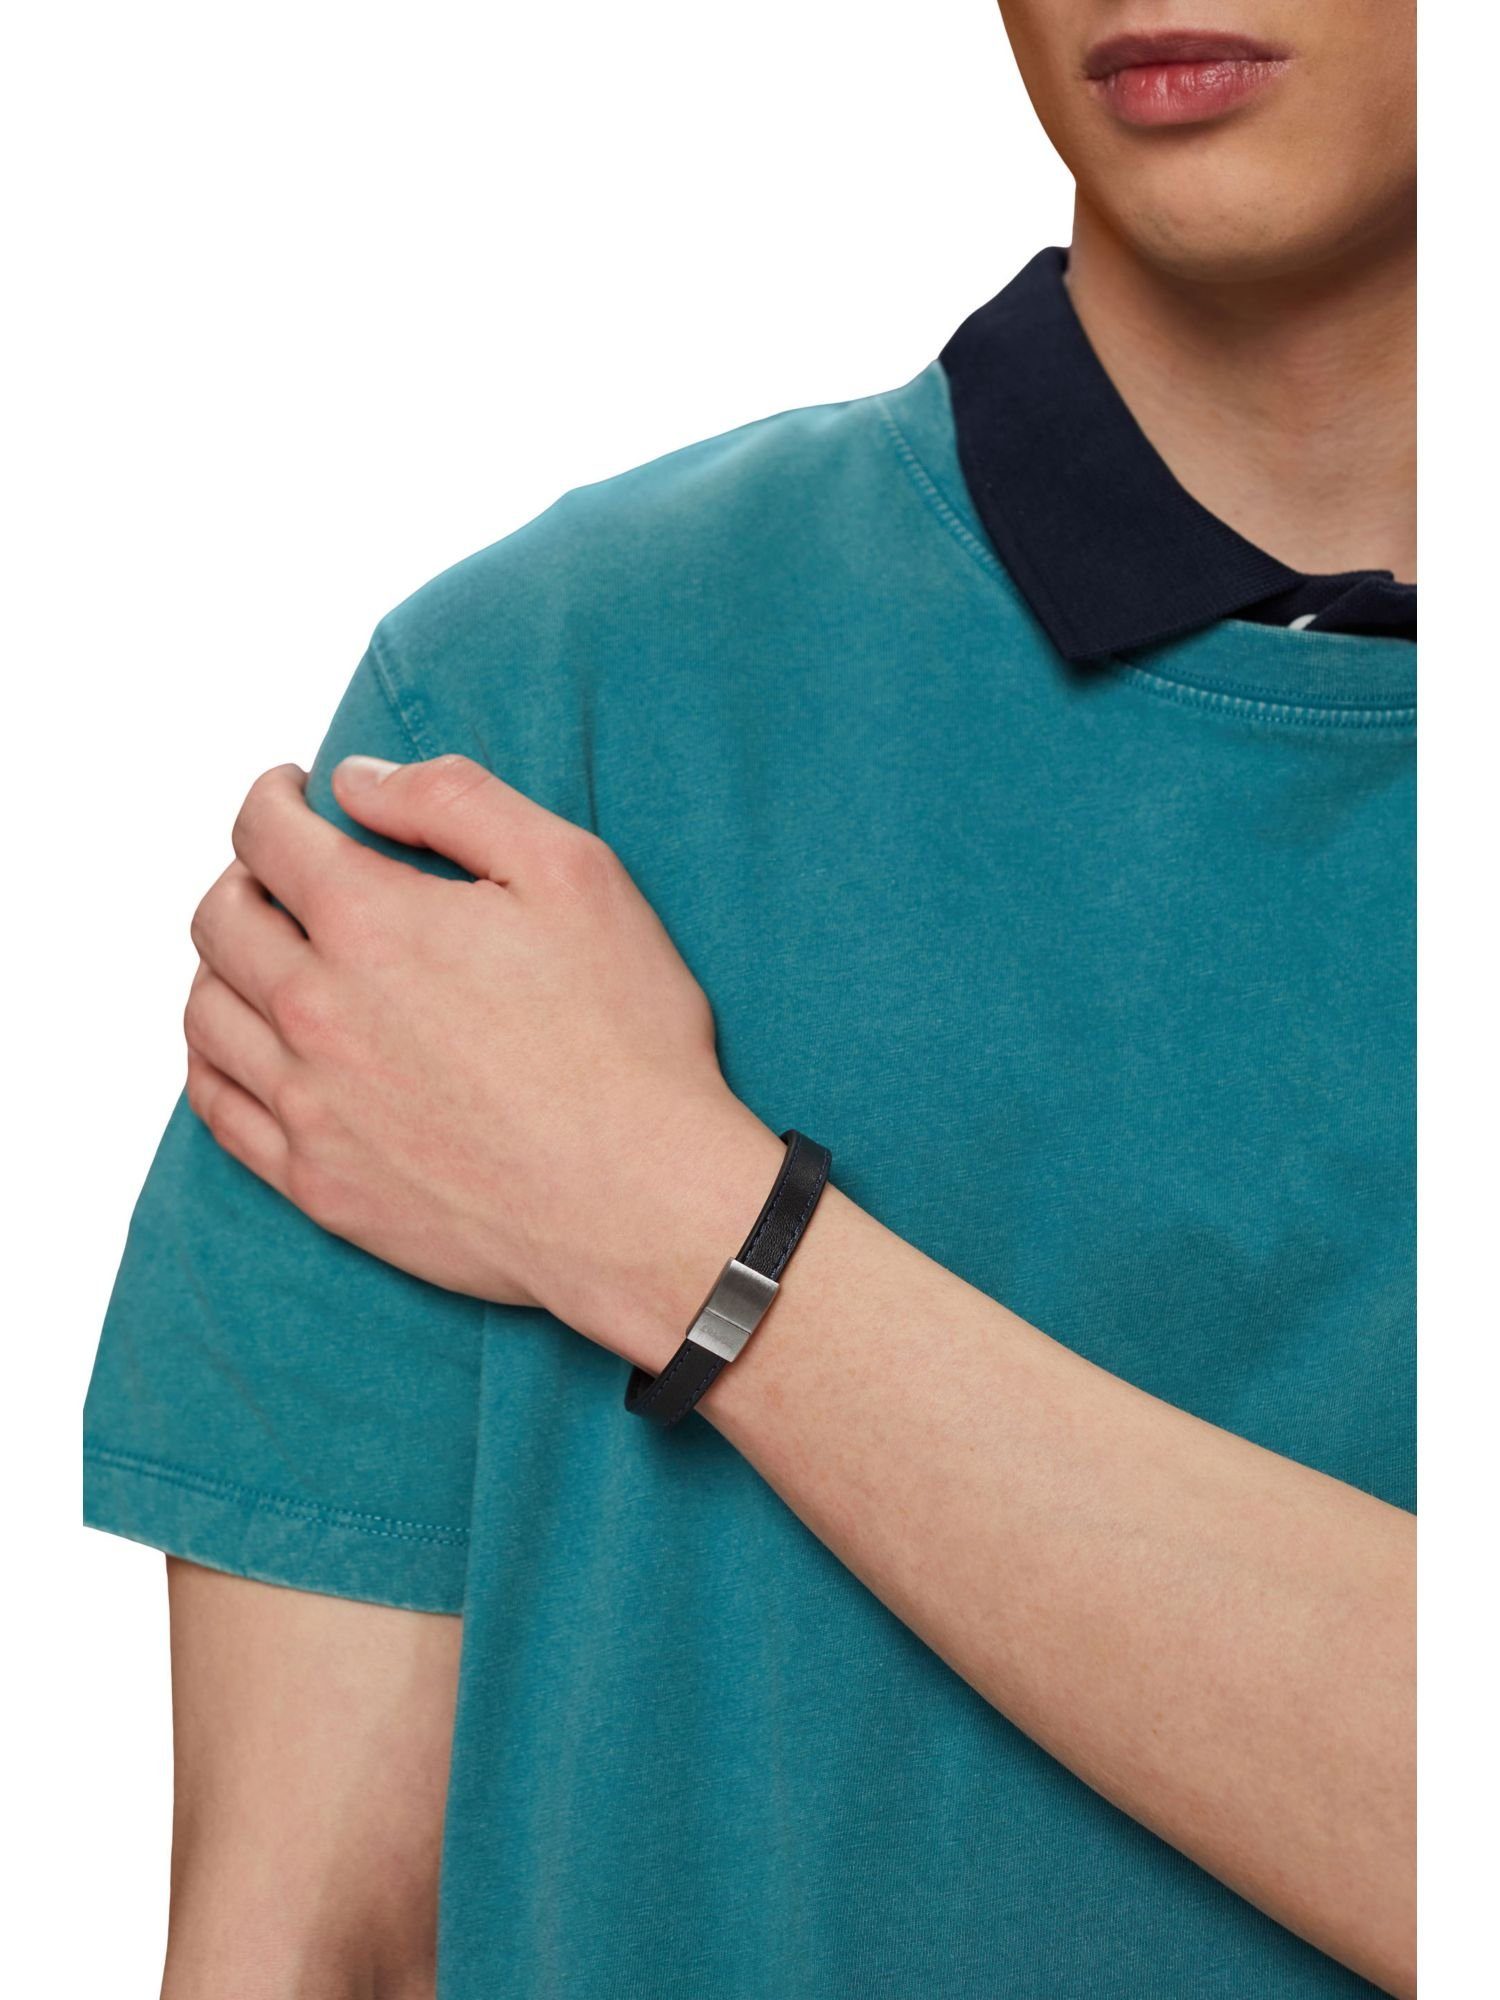 Armband Armband Magnetverschluss schwarz in Esprit Lederoptik mit